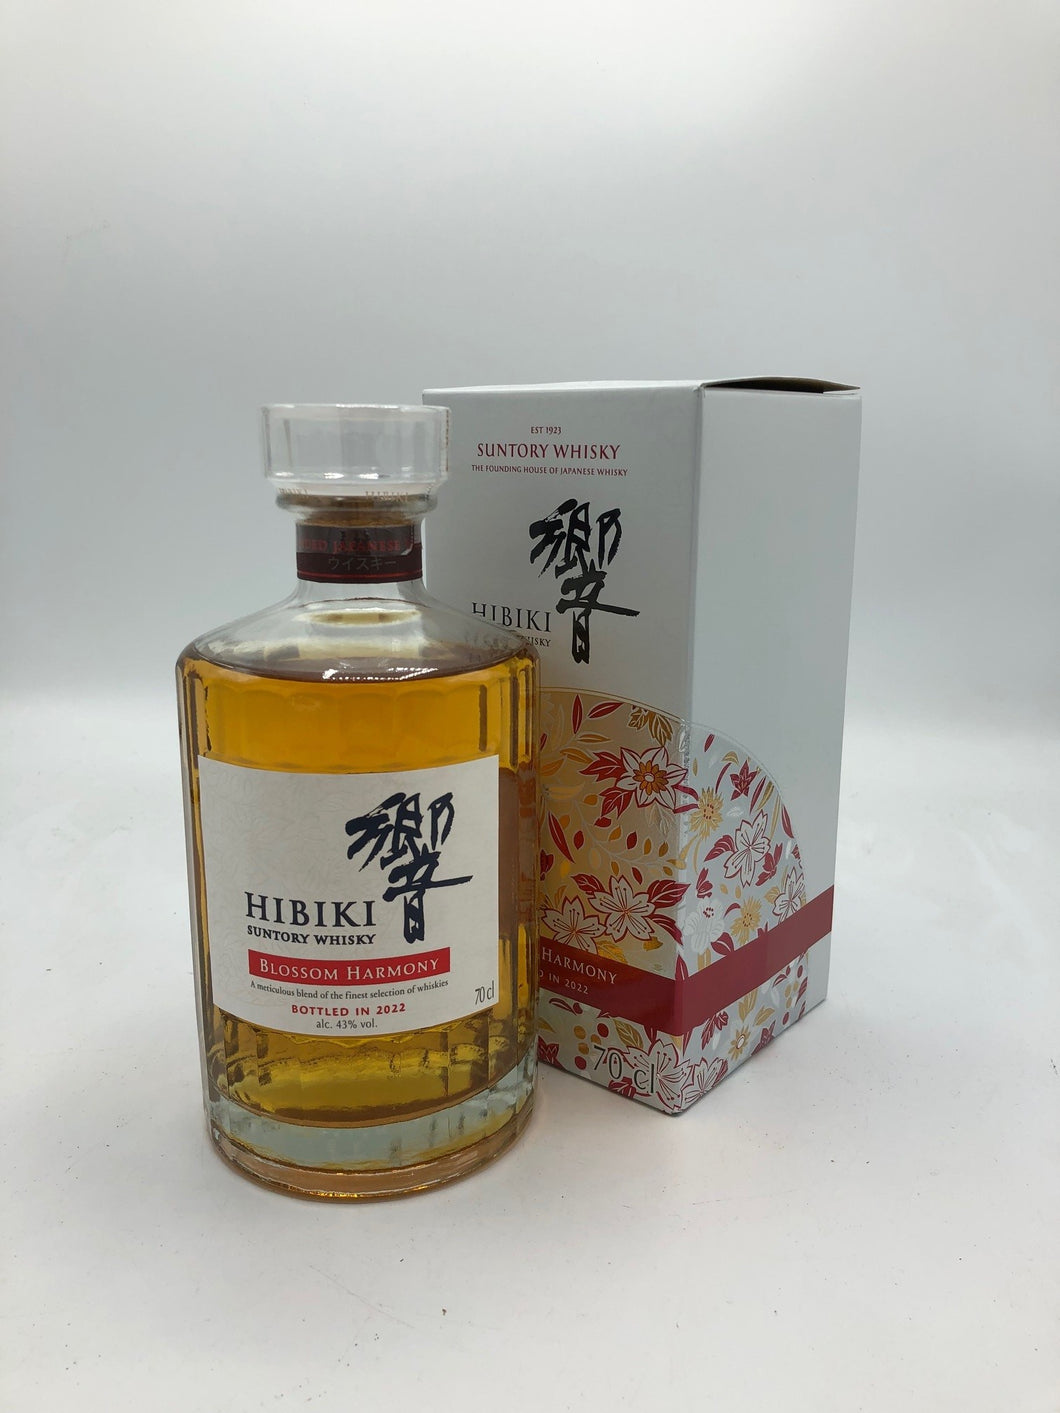 Hibiki Blossom Harmony Limited Edition 2022